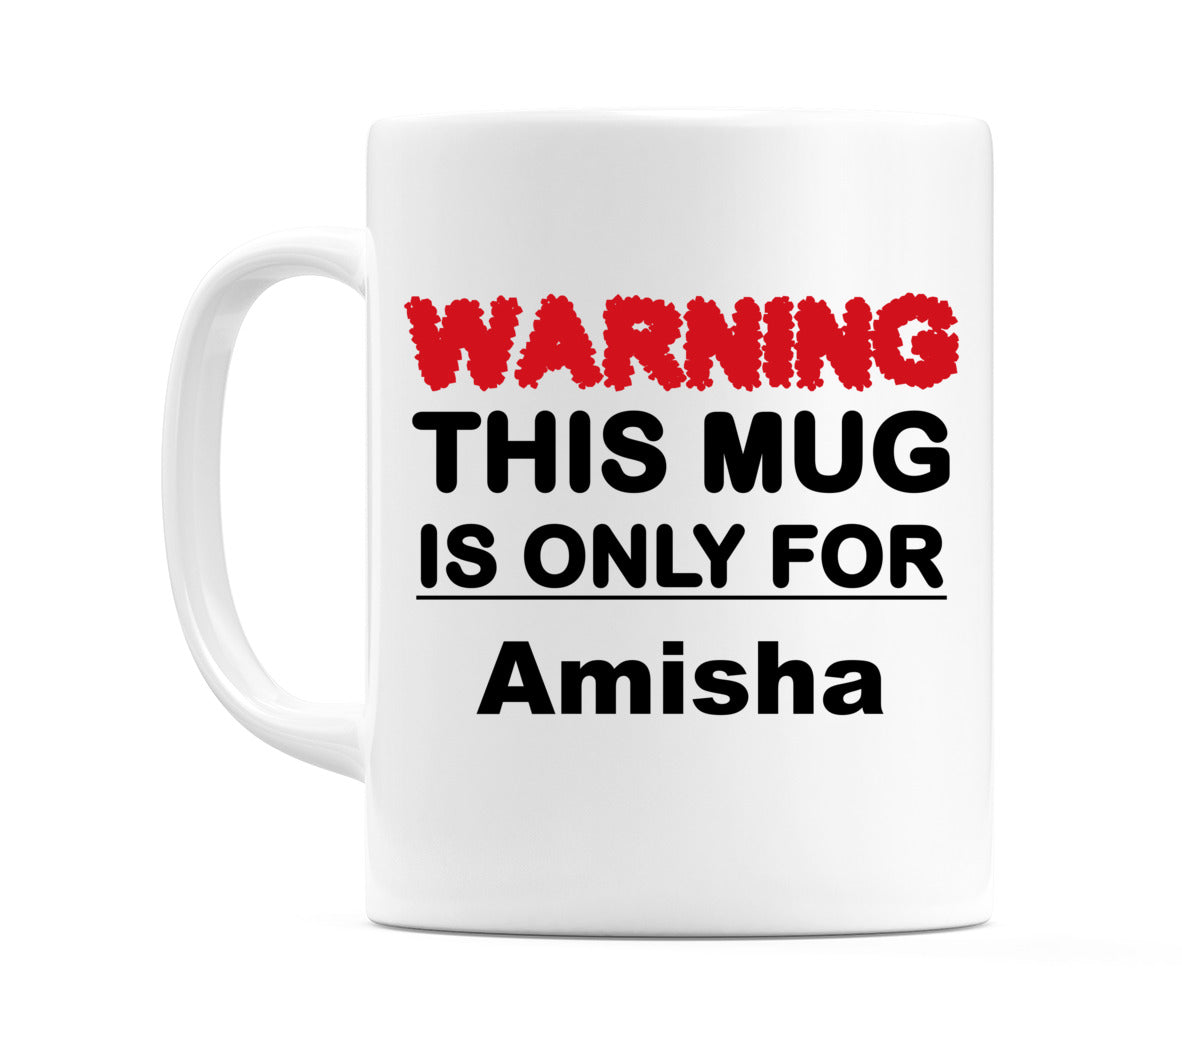 Warning This Mug is ONLY for Amisha Mug